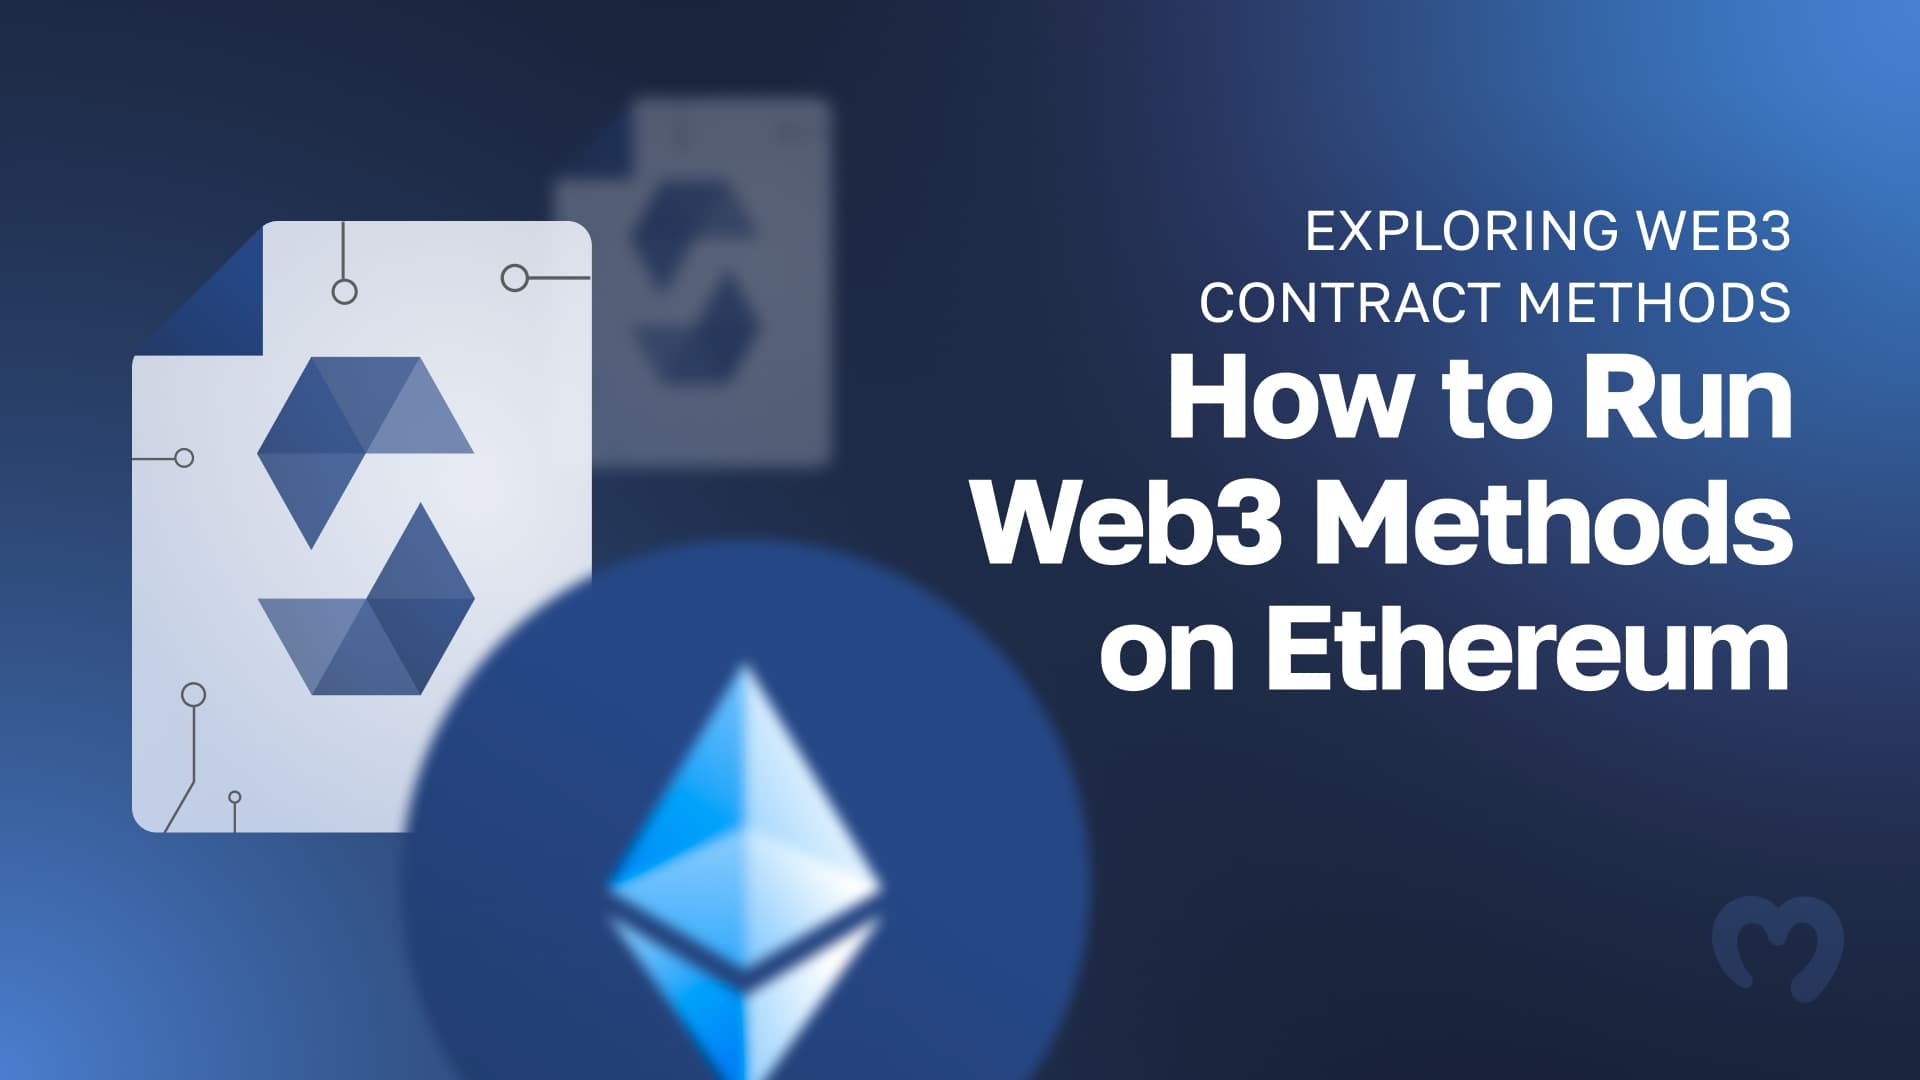 Exploring Web3 Contract Methods - How to Run Web3 Methods on Ethereum